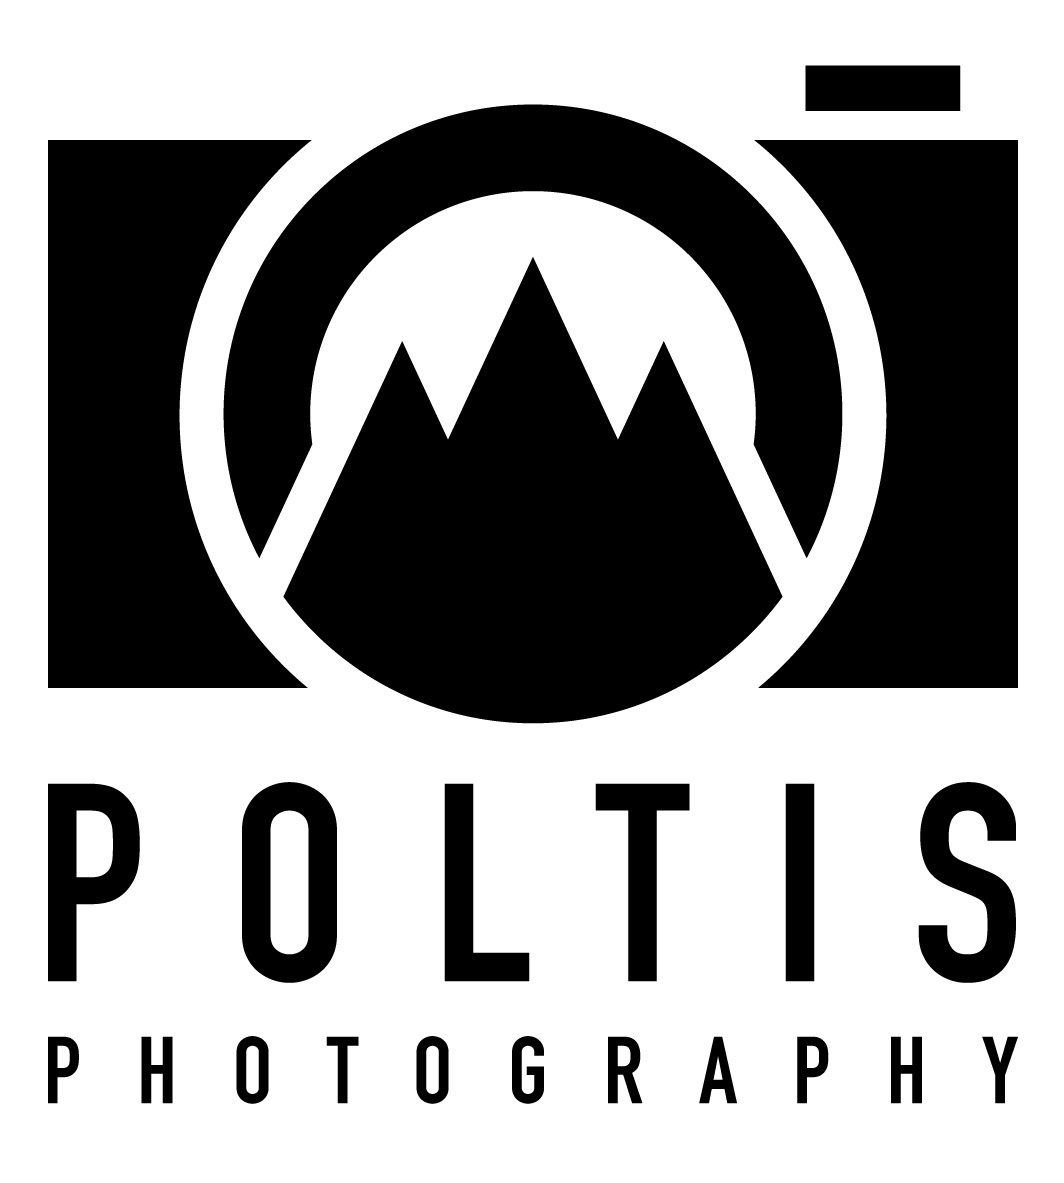 Poltisphotography